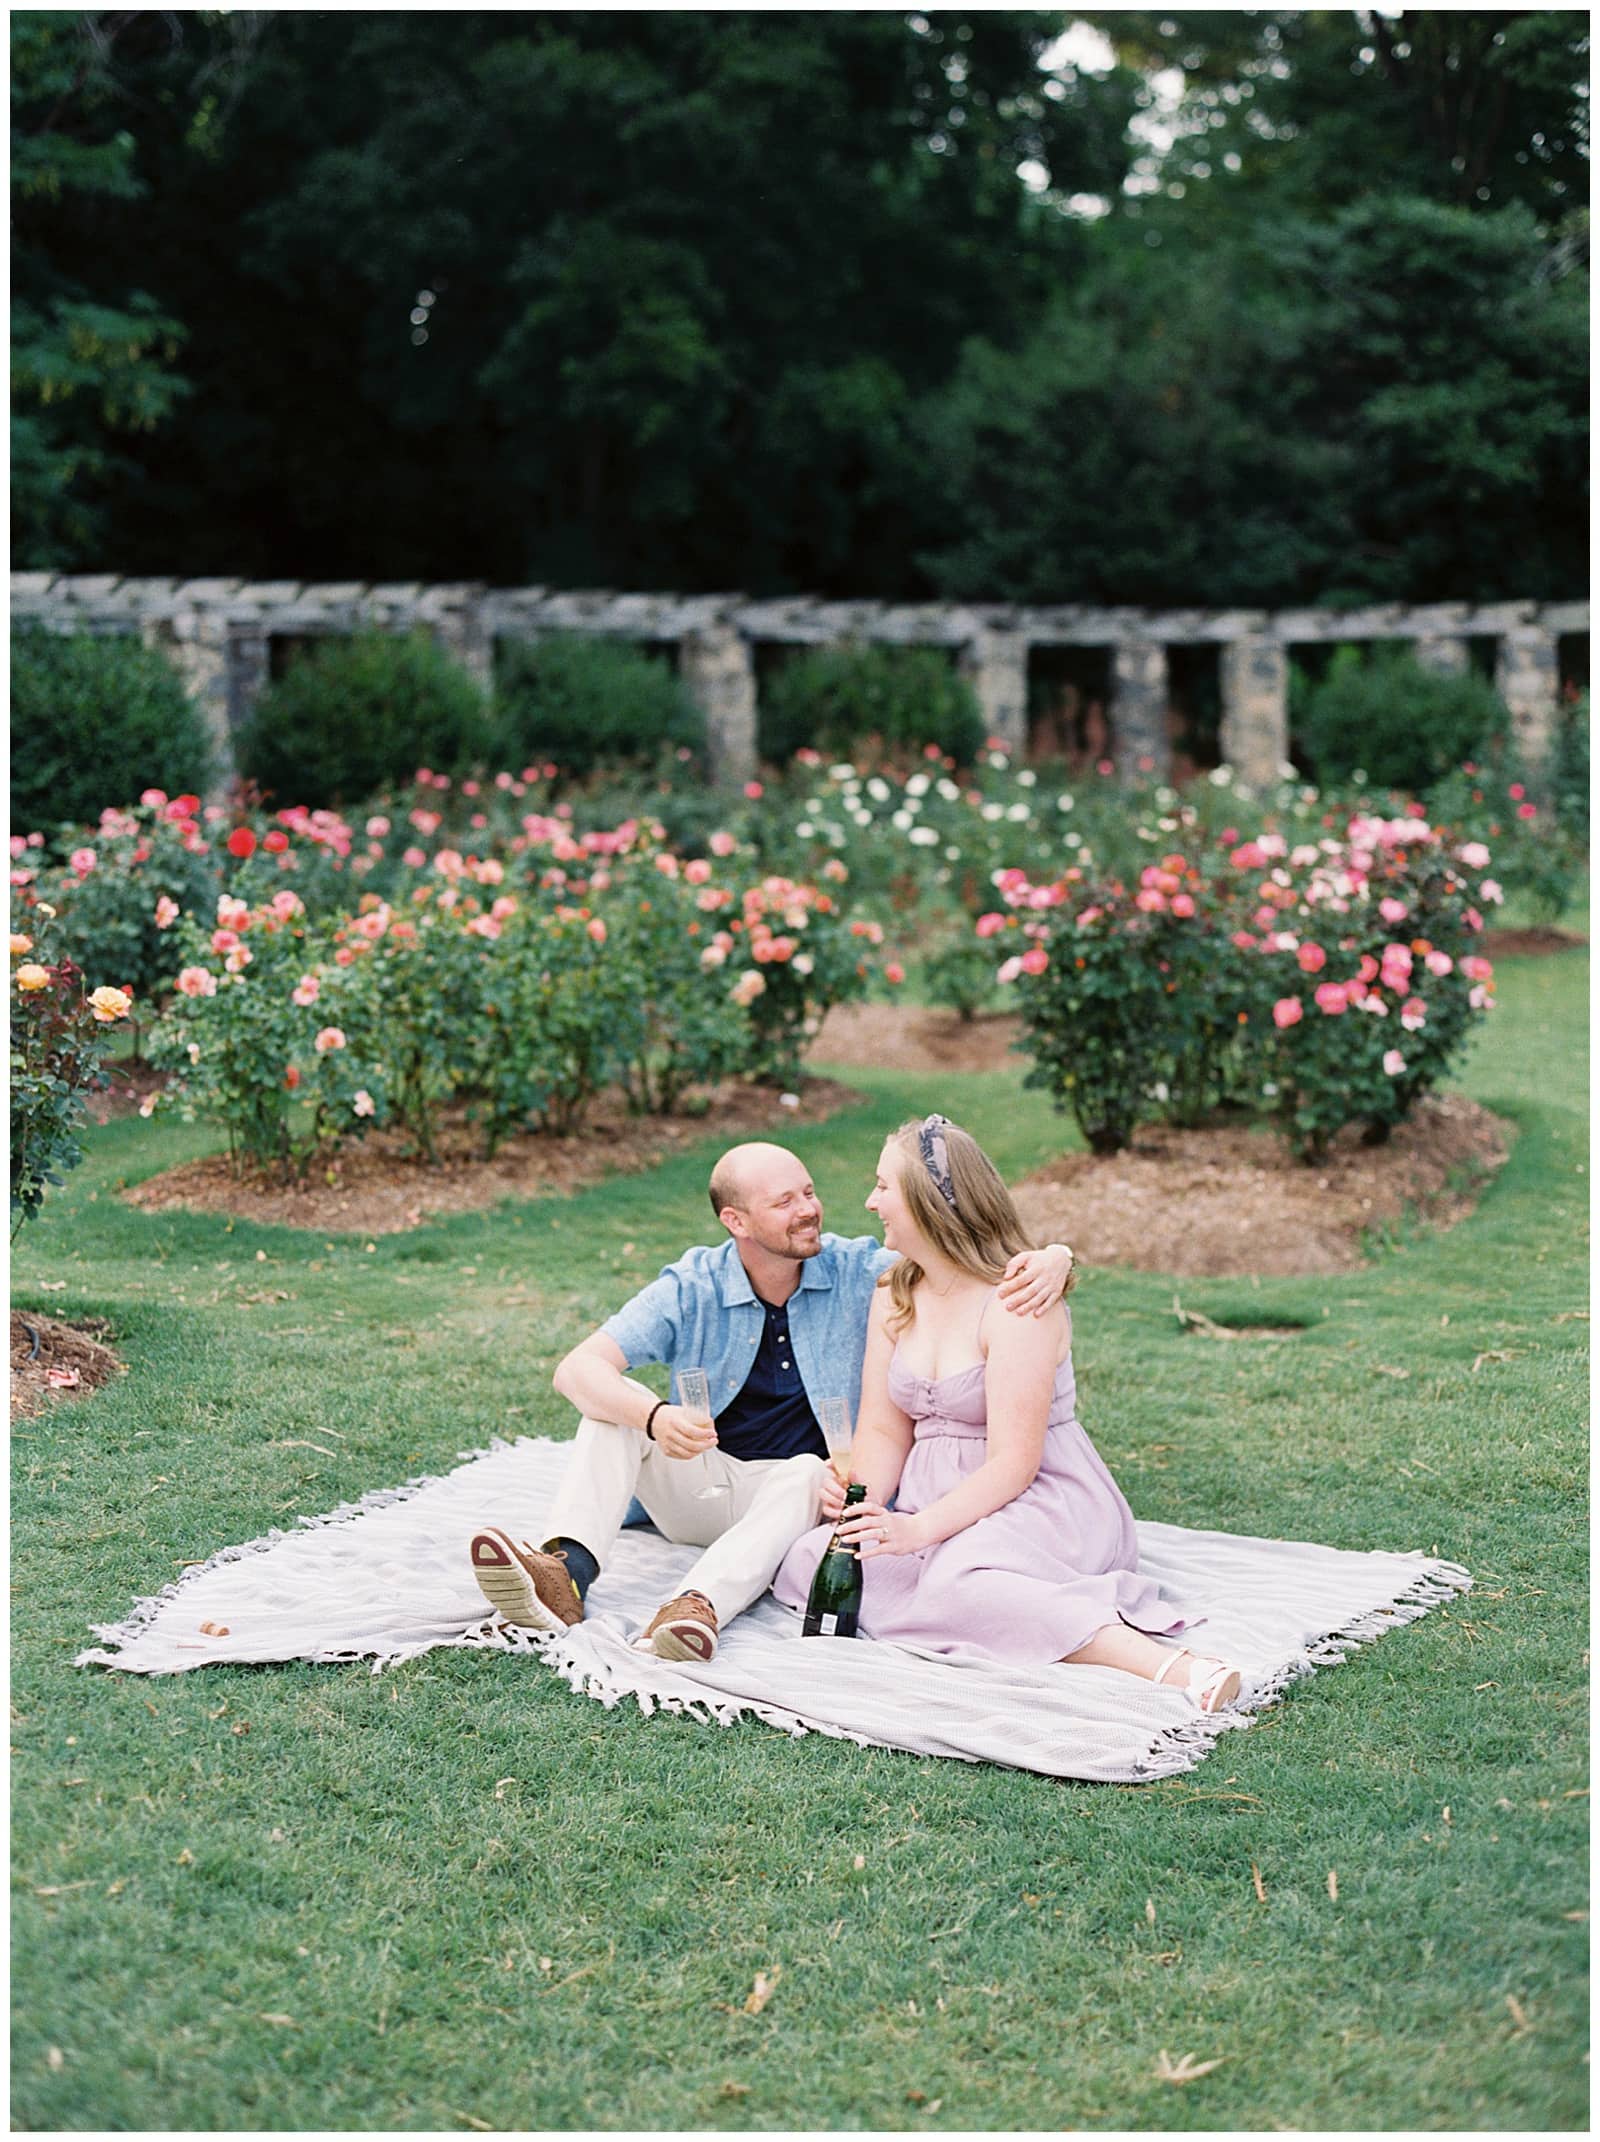 Danielle-Defayette-Photography-Raleigh-Rose-Garden-Engagement-Photos_0001.jpg